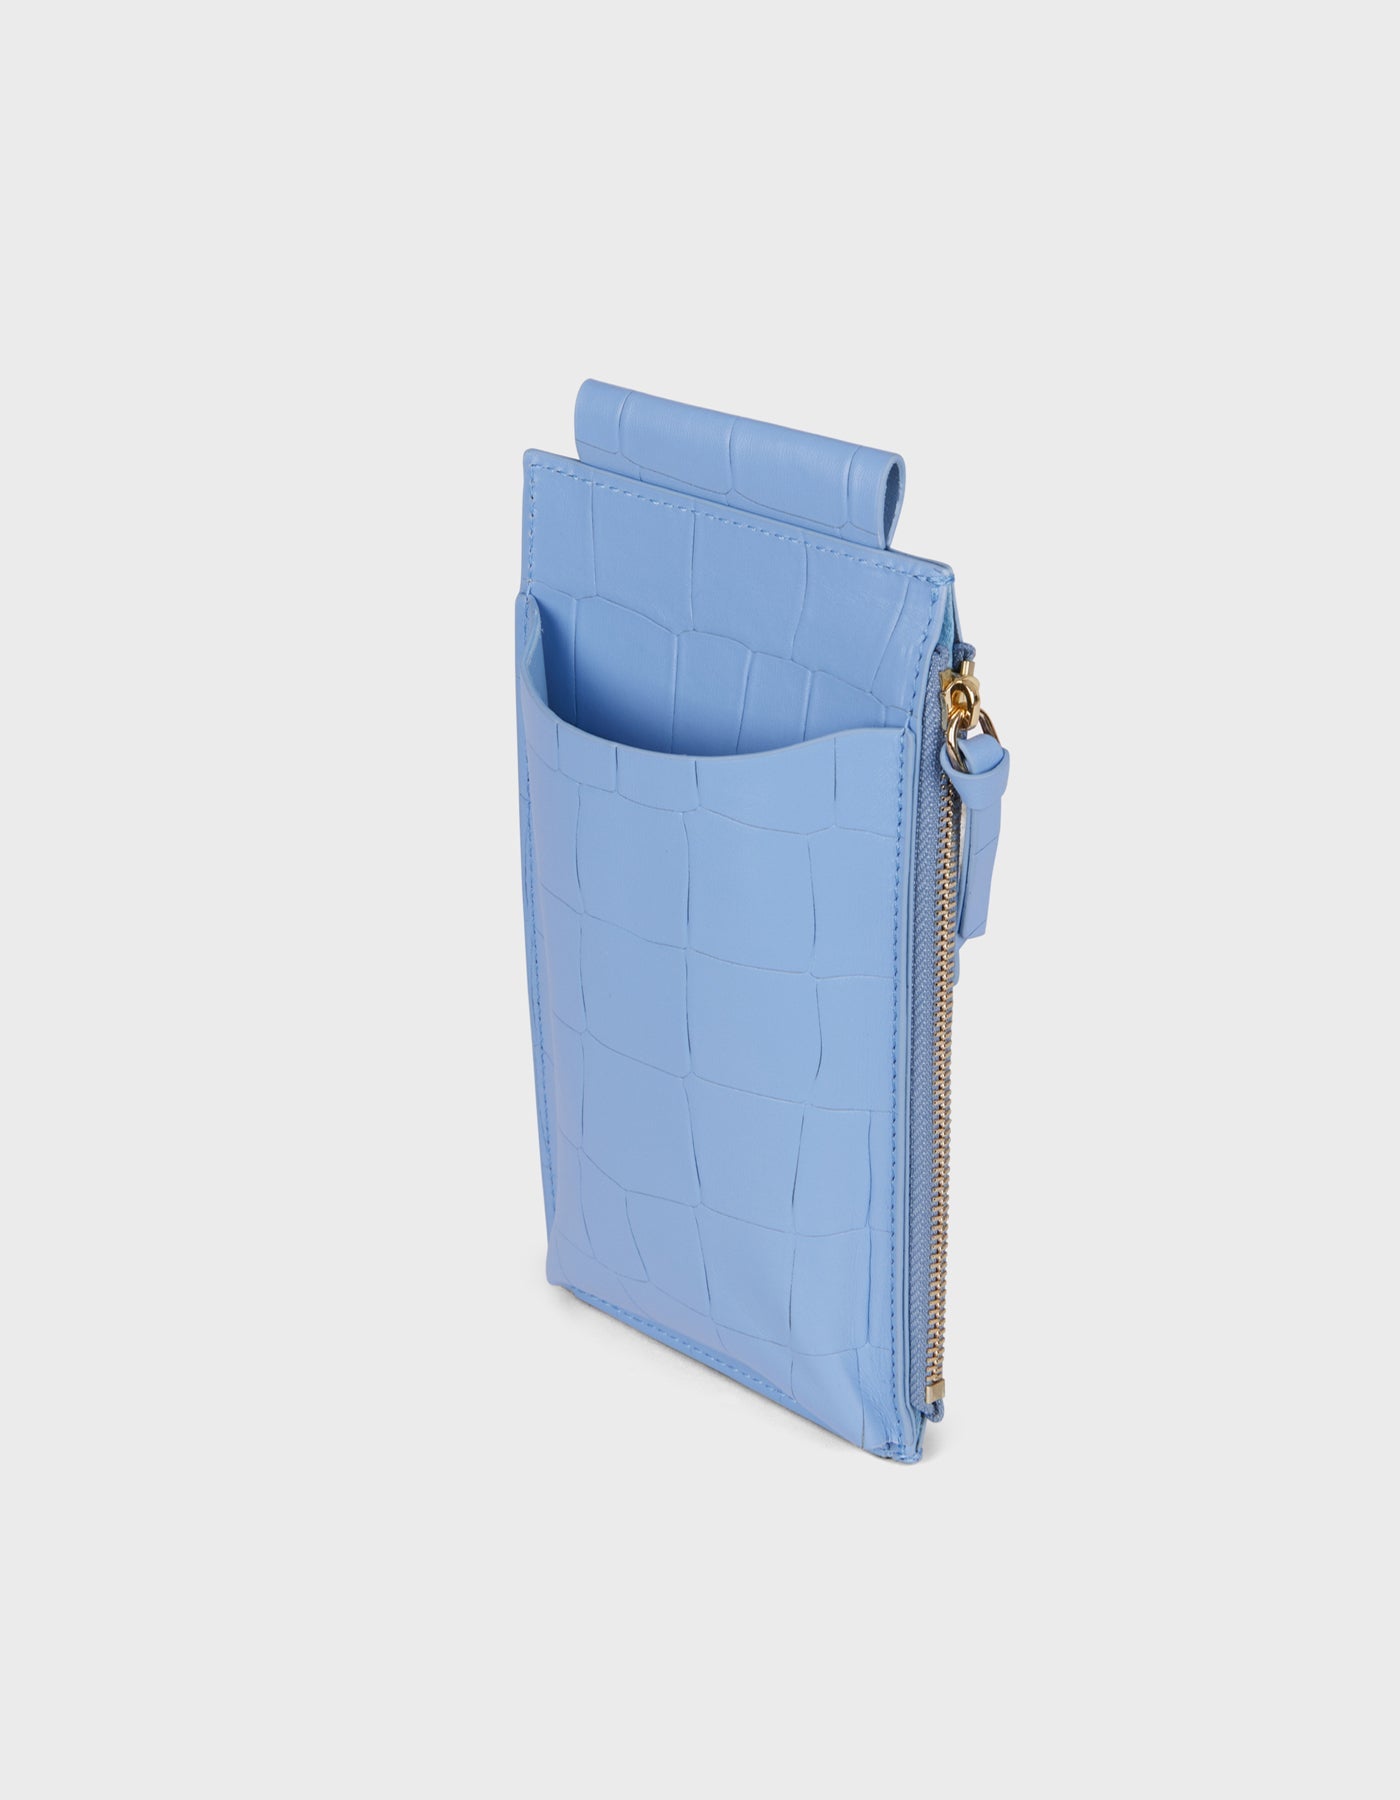 HiVa Atelier | Crossbody Phone Bag Croco Effect Tranquil Blue | Beautiful and Versatile